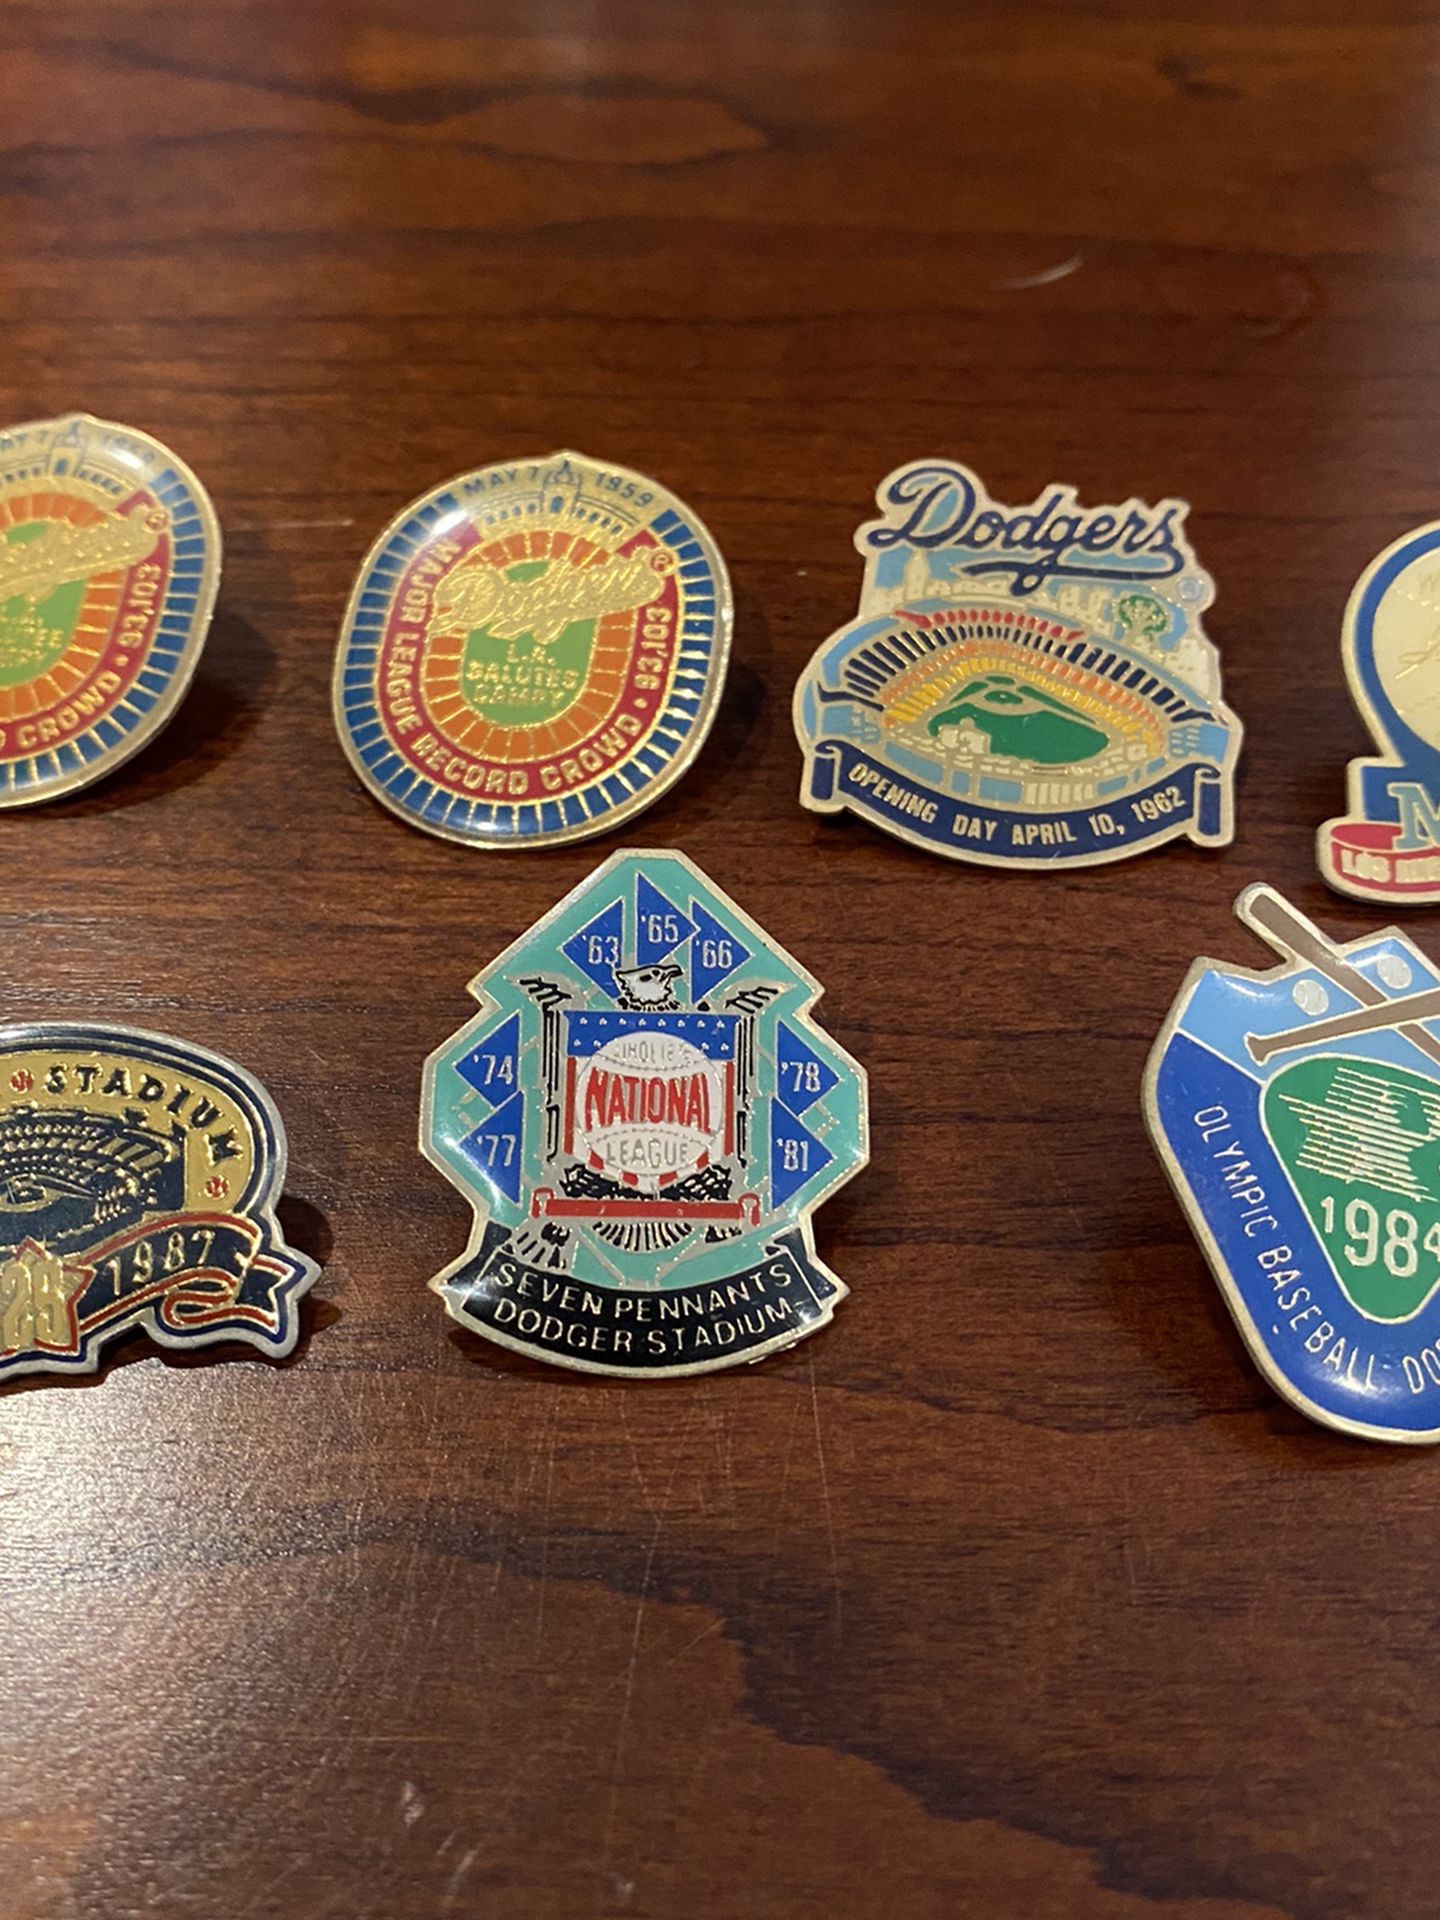 7 Dodgers Vintage Pins 80s & 90s